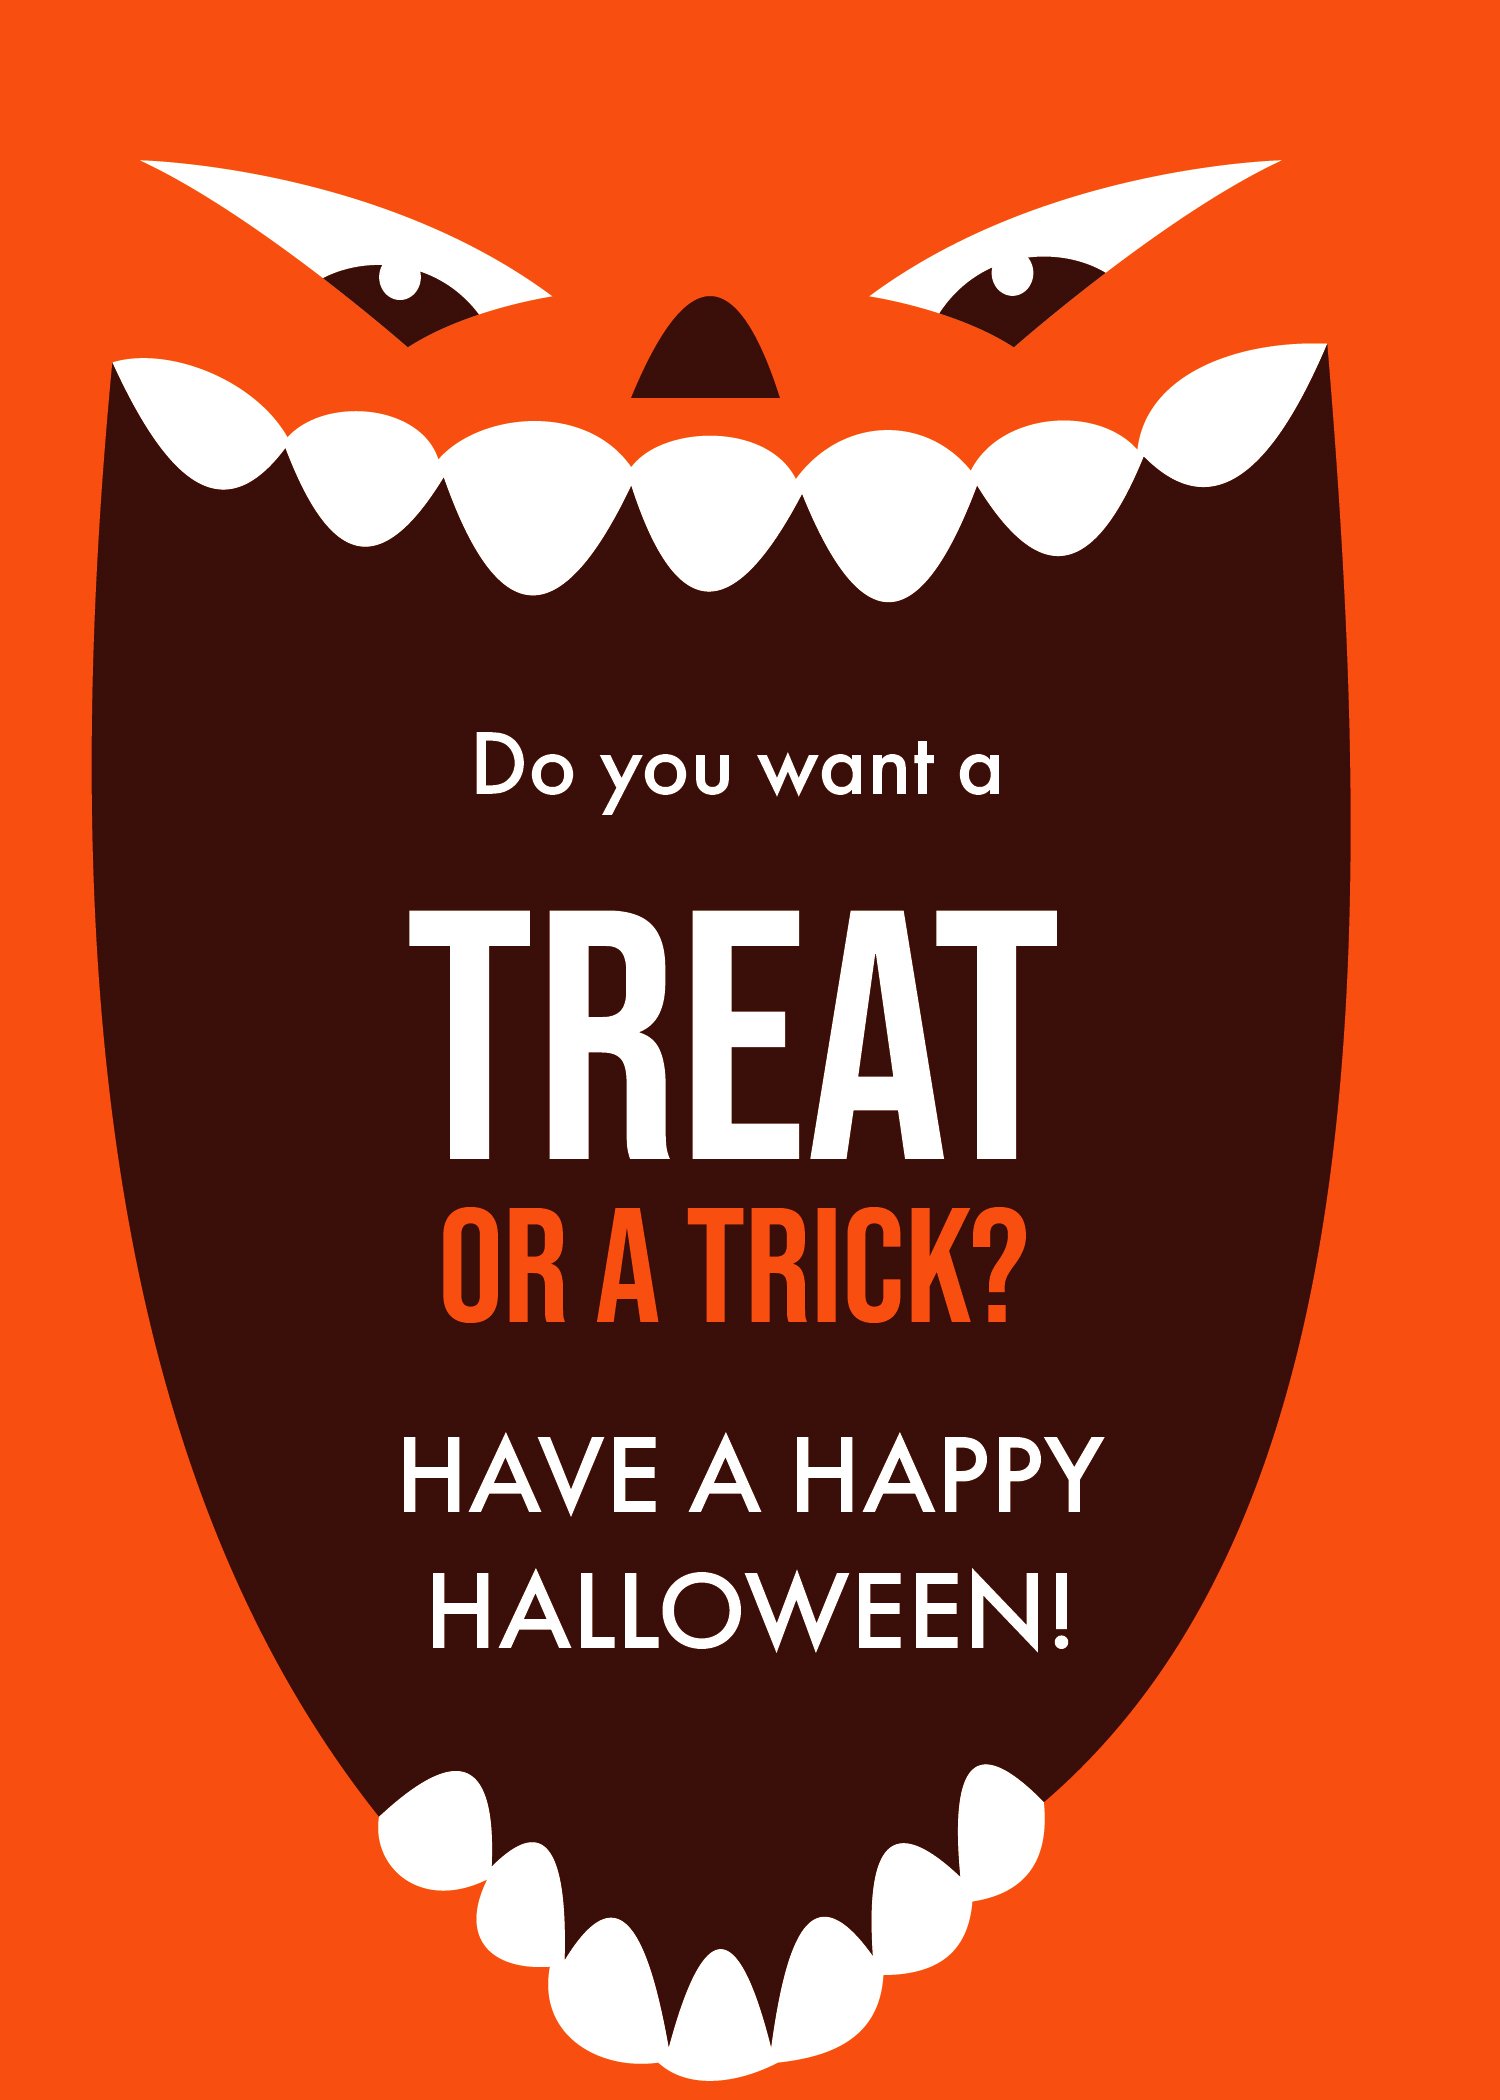 Free Halloween Greeting in Word, Google Docs, Illustrator, PSD, EPS, SVG, JPG, PNG